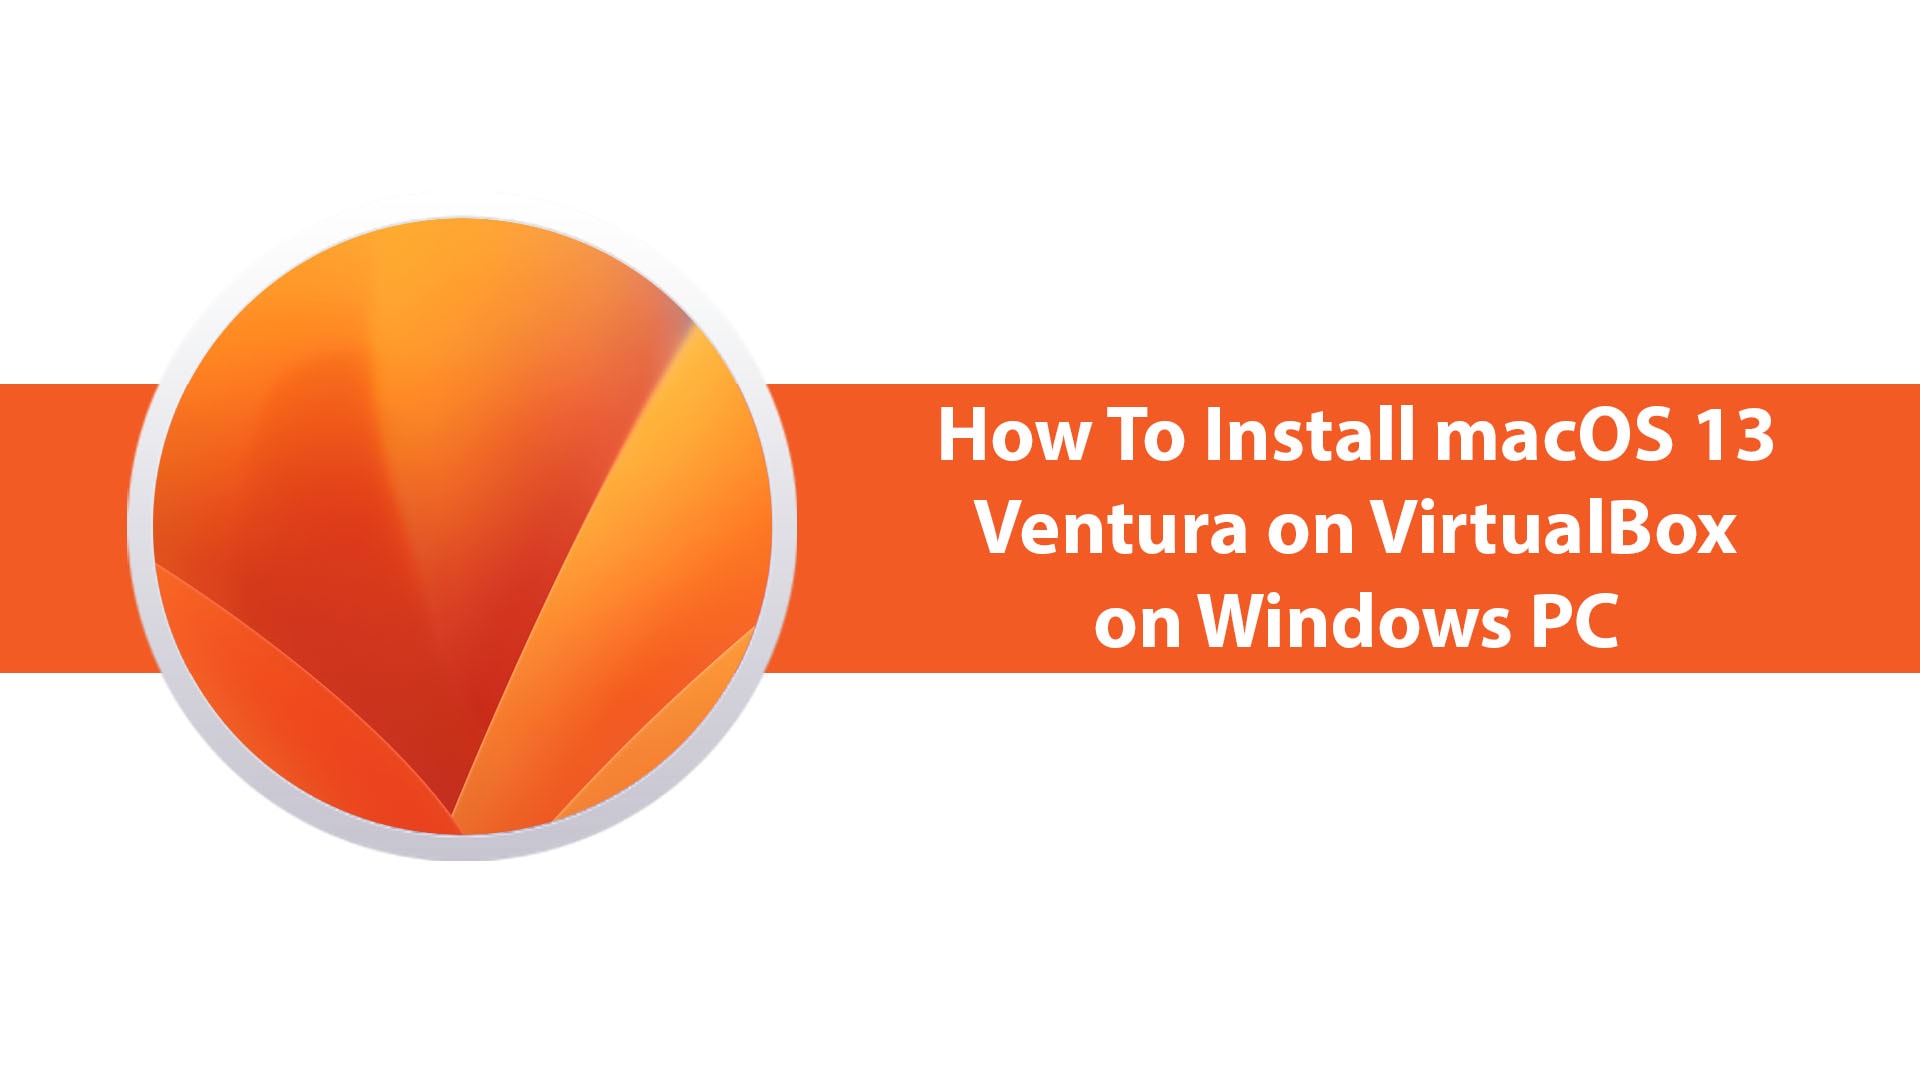 How To Install macOS 13 Ventura on VirtualBox on Windows PC